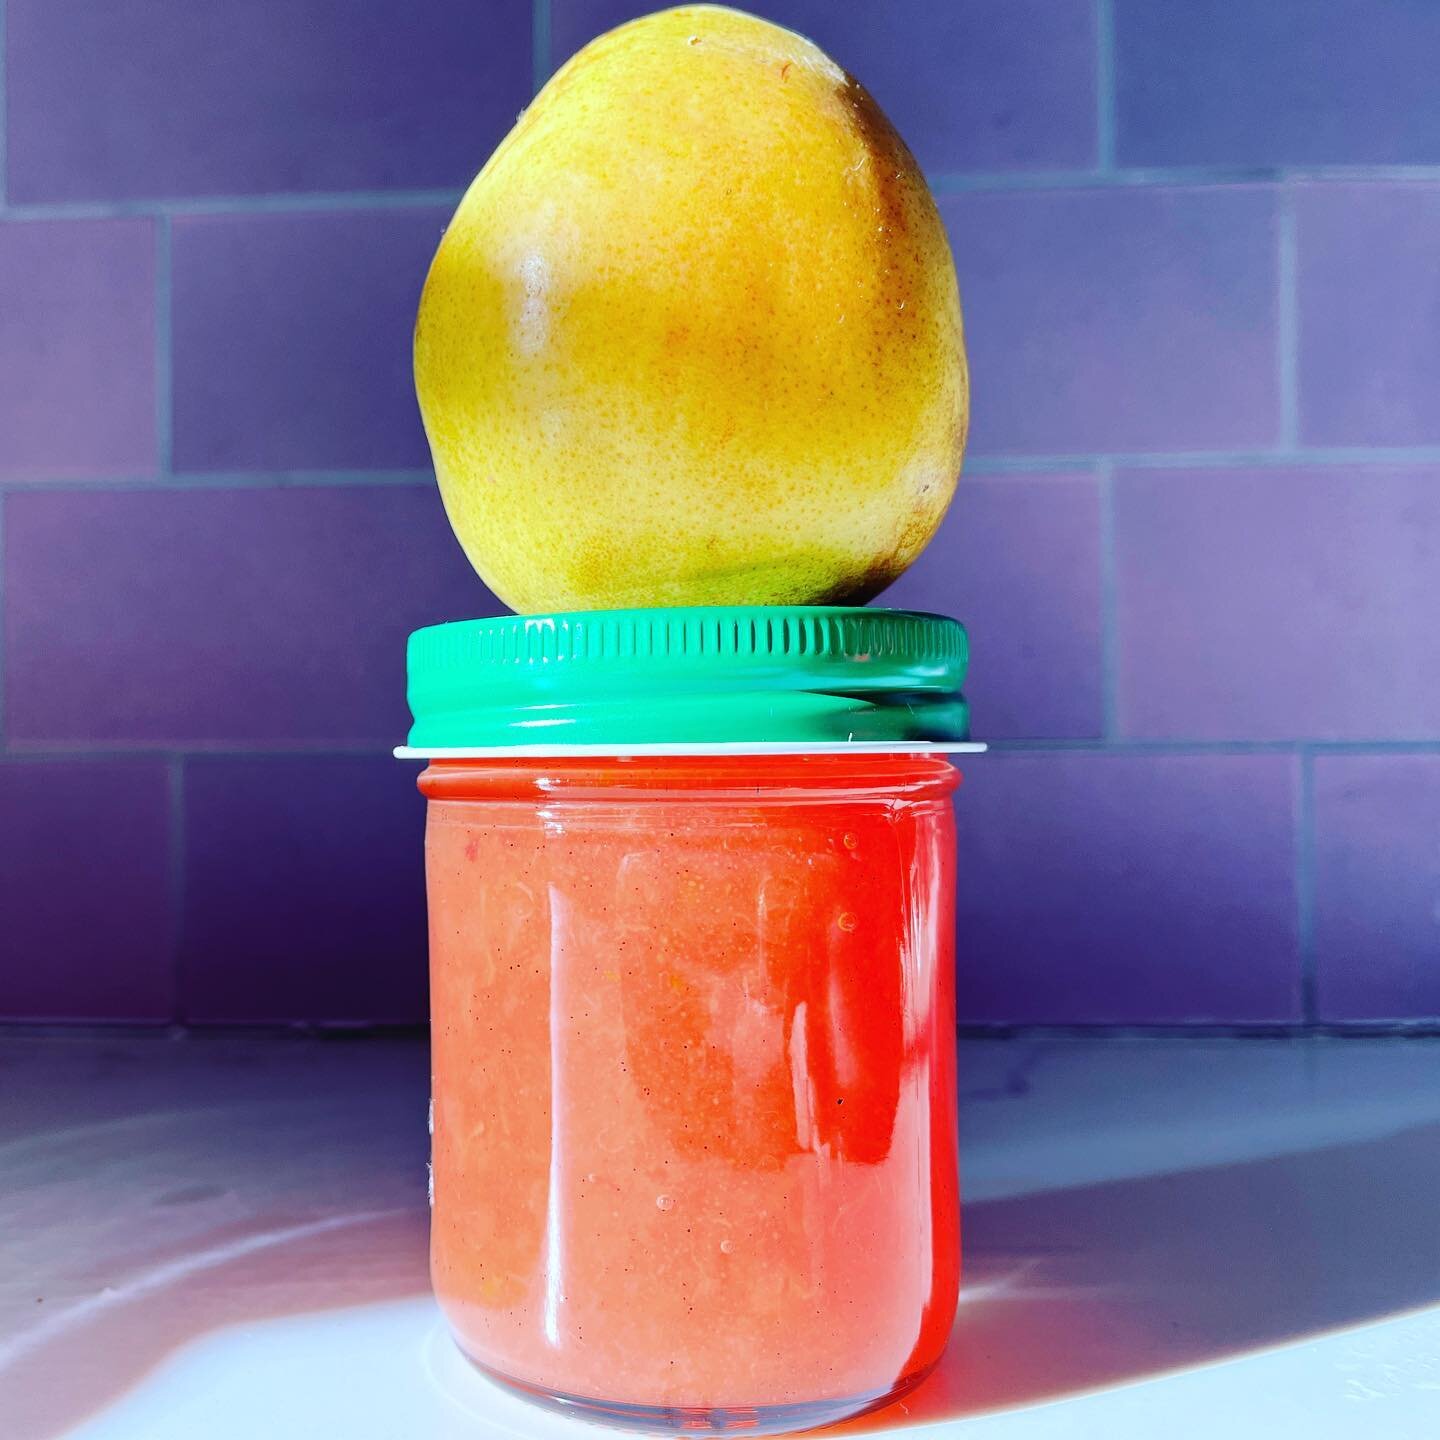 Pearfectly Balanced Pear Jam
🍐 🍐 🍐 

#pear #elderflower #vanillabean
#alamedafruitco #morning #sunshine #nofilterneeded